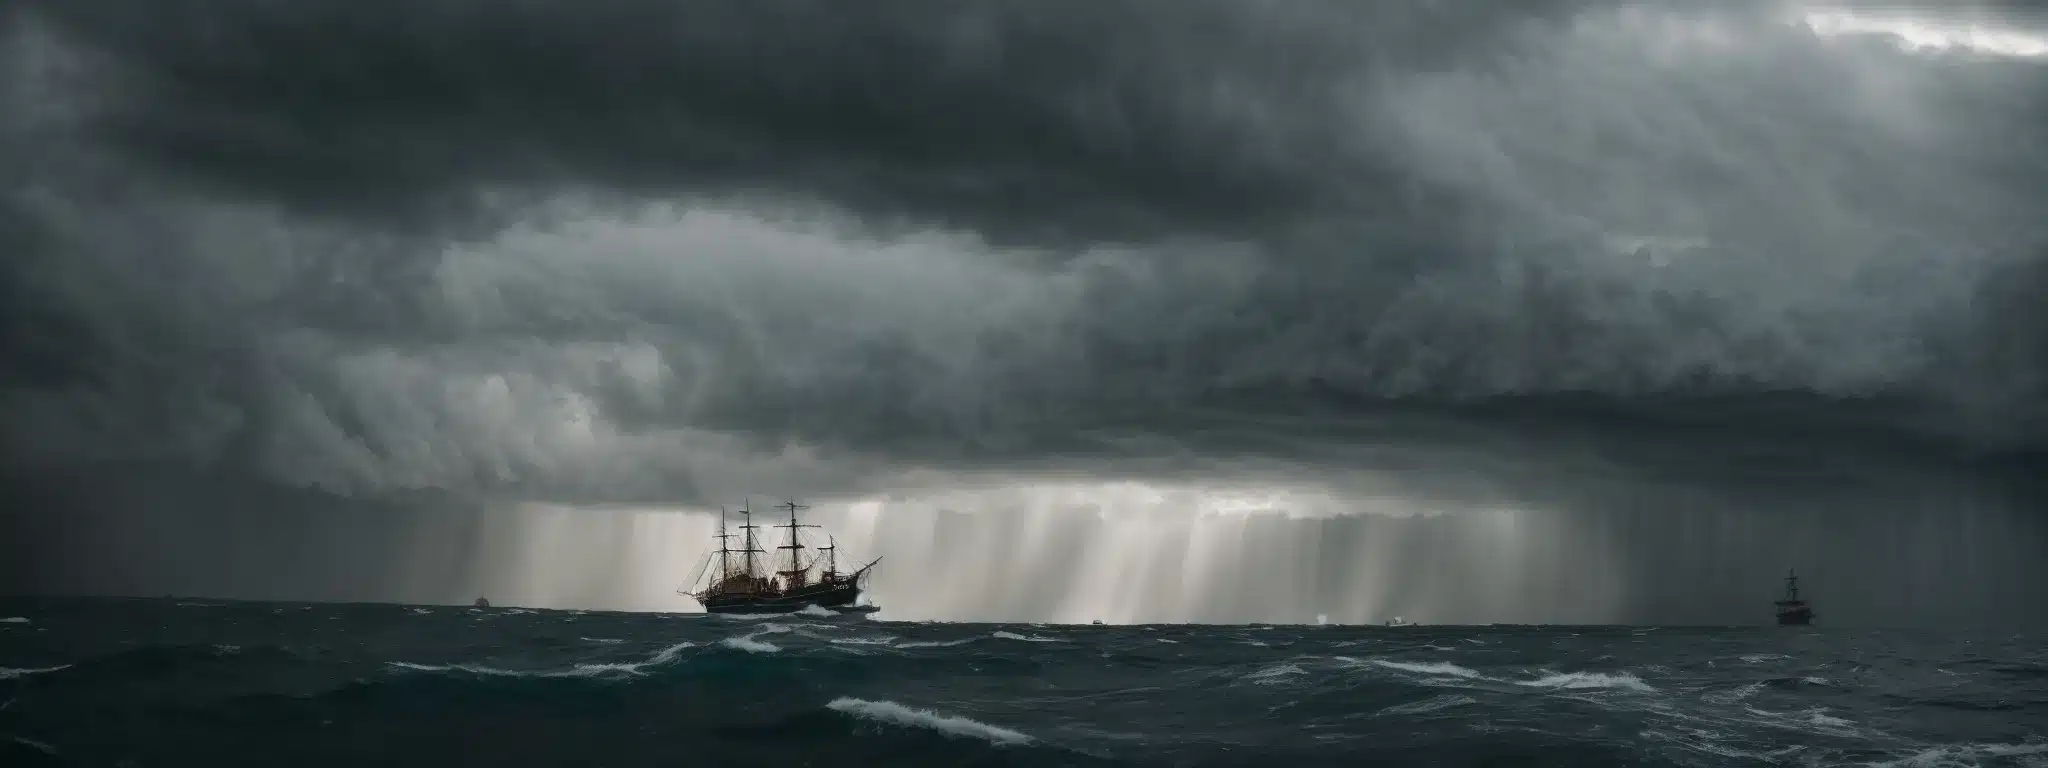 A Pirate Ship Navigates Tumultuous Seas Under A Stormy Sky.